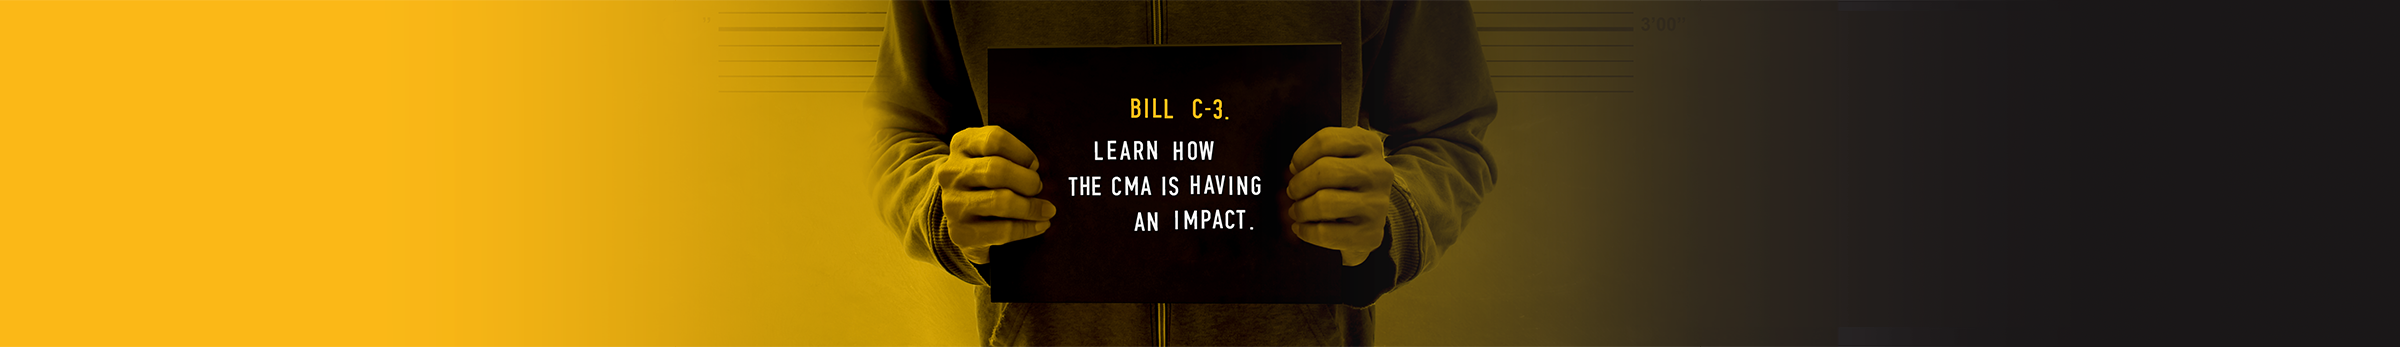 Learn how the CMA is having an impact